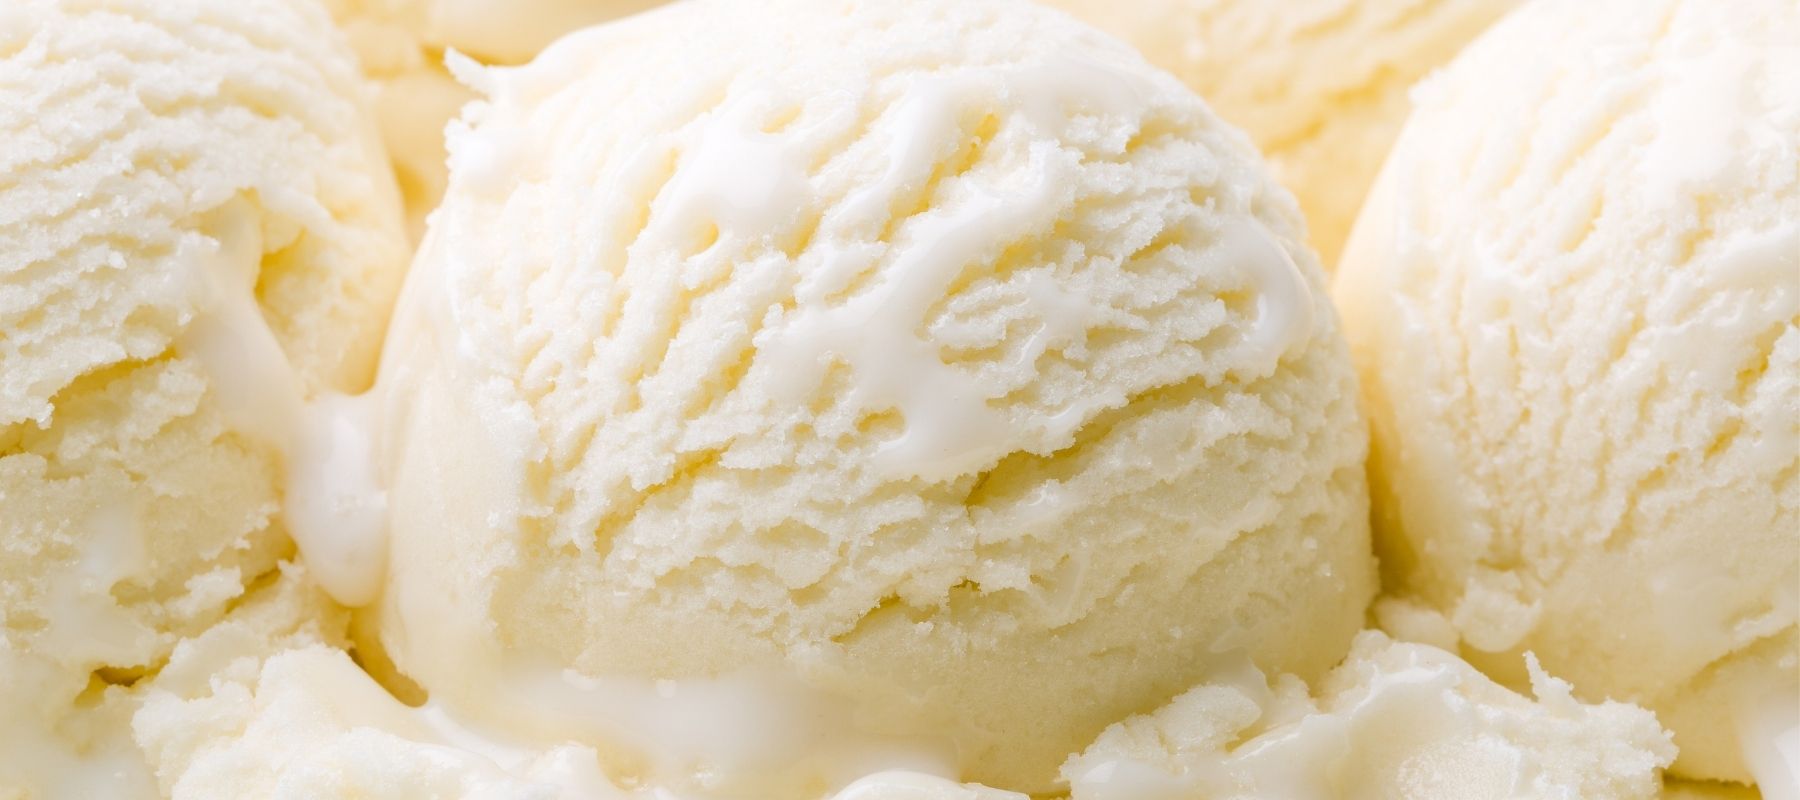 Large Scoops of Vanilla Ice Cream